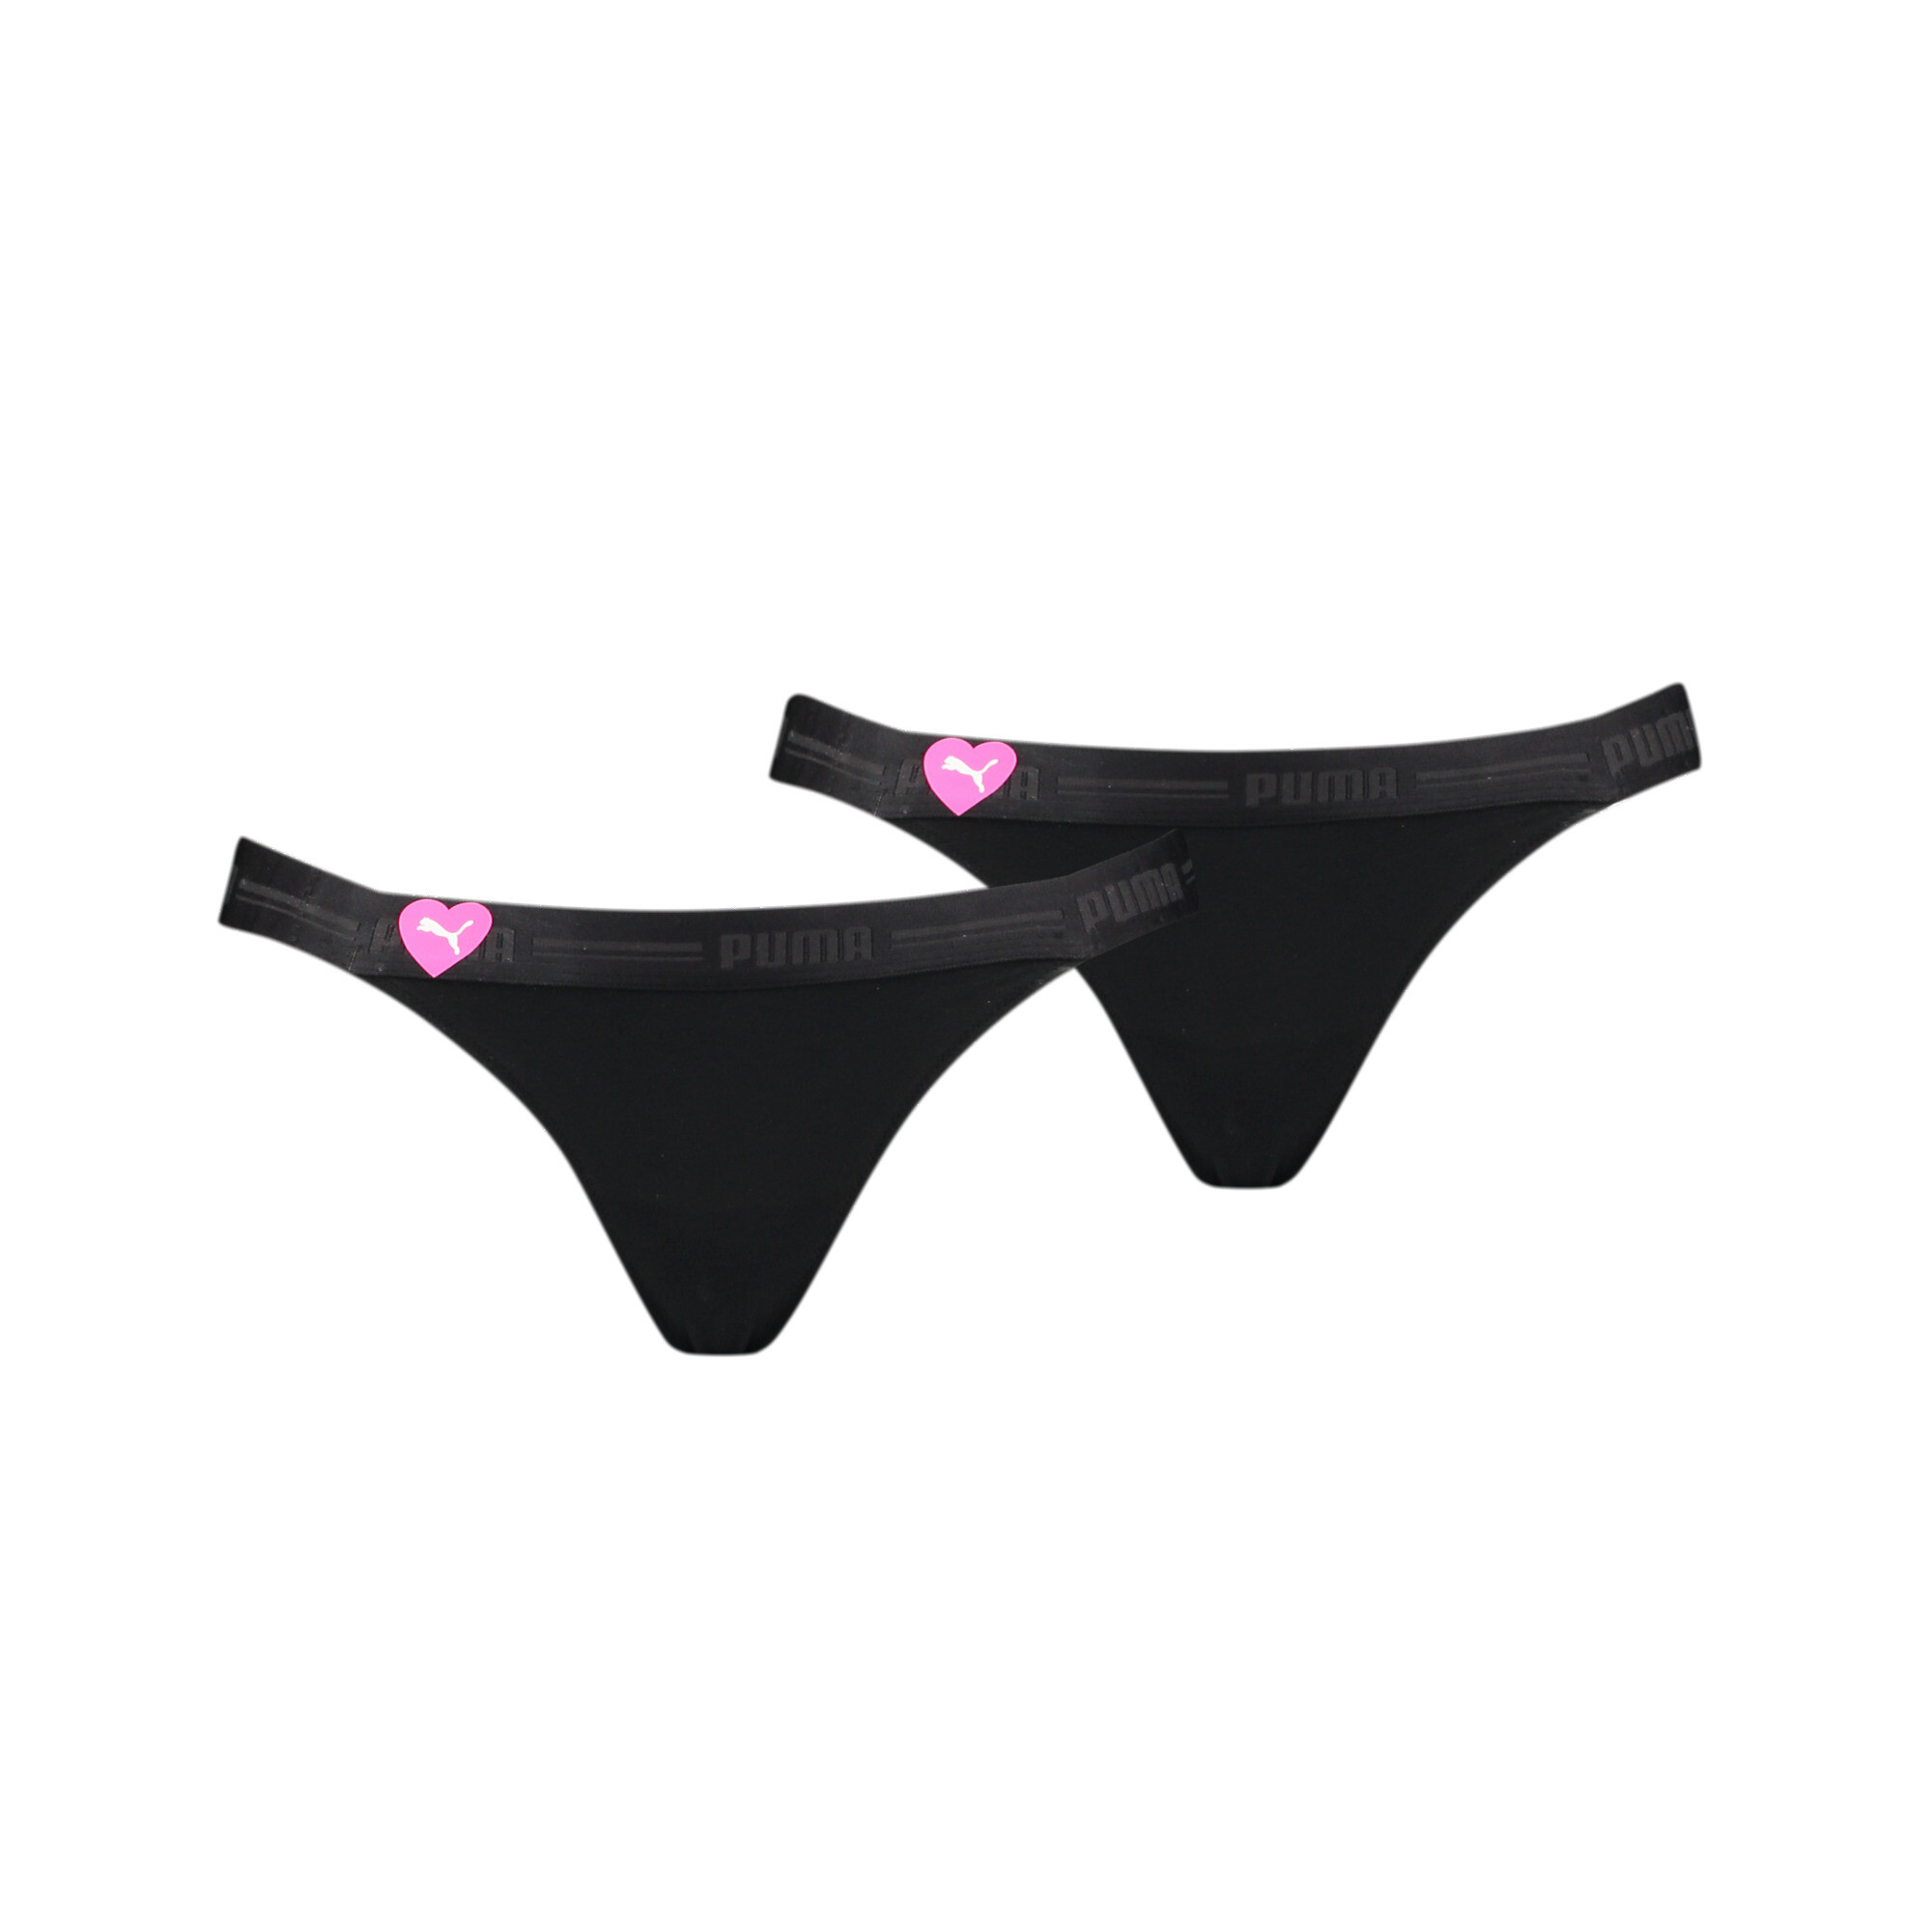 Women's Puma's Heart String Bottom Underwear 2 Pack, Black, Size 1, Clothing